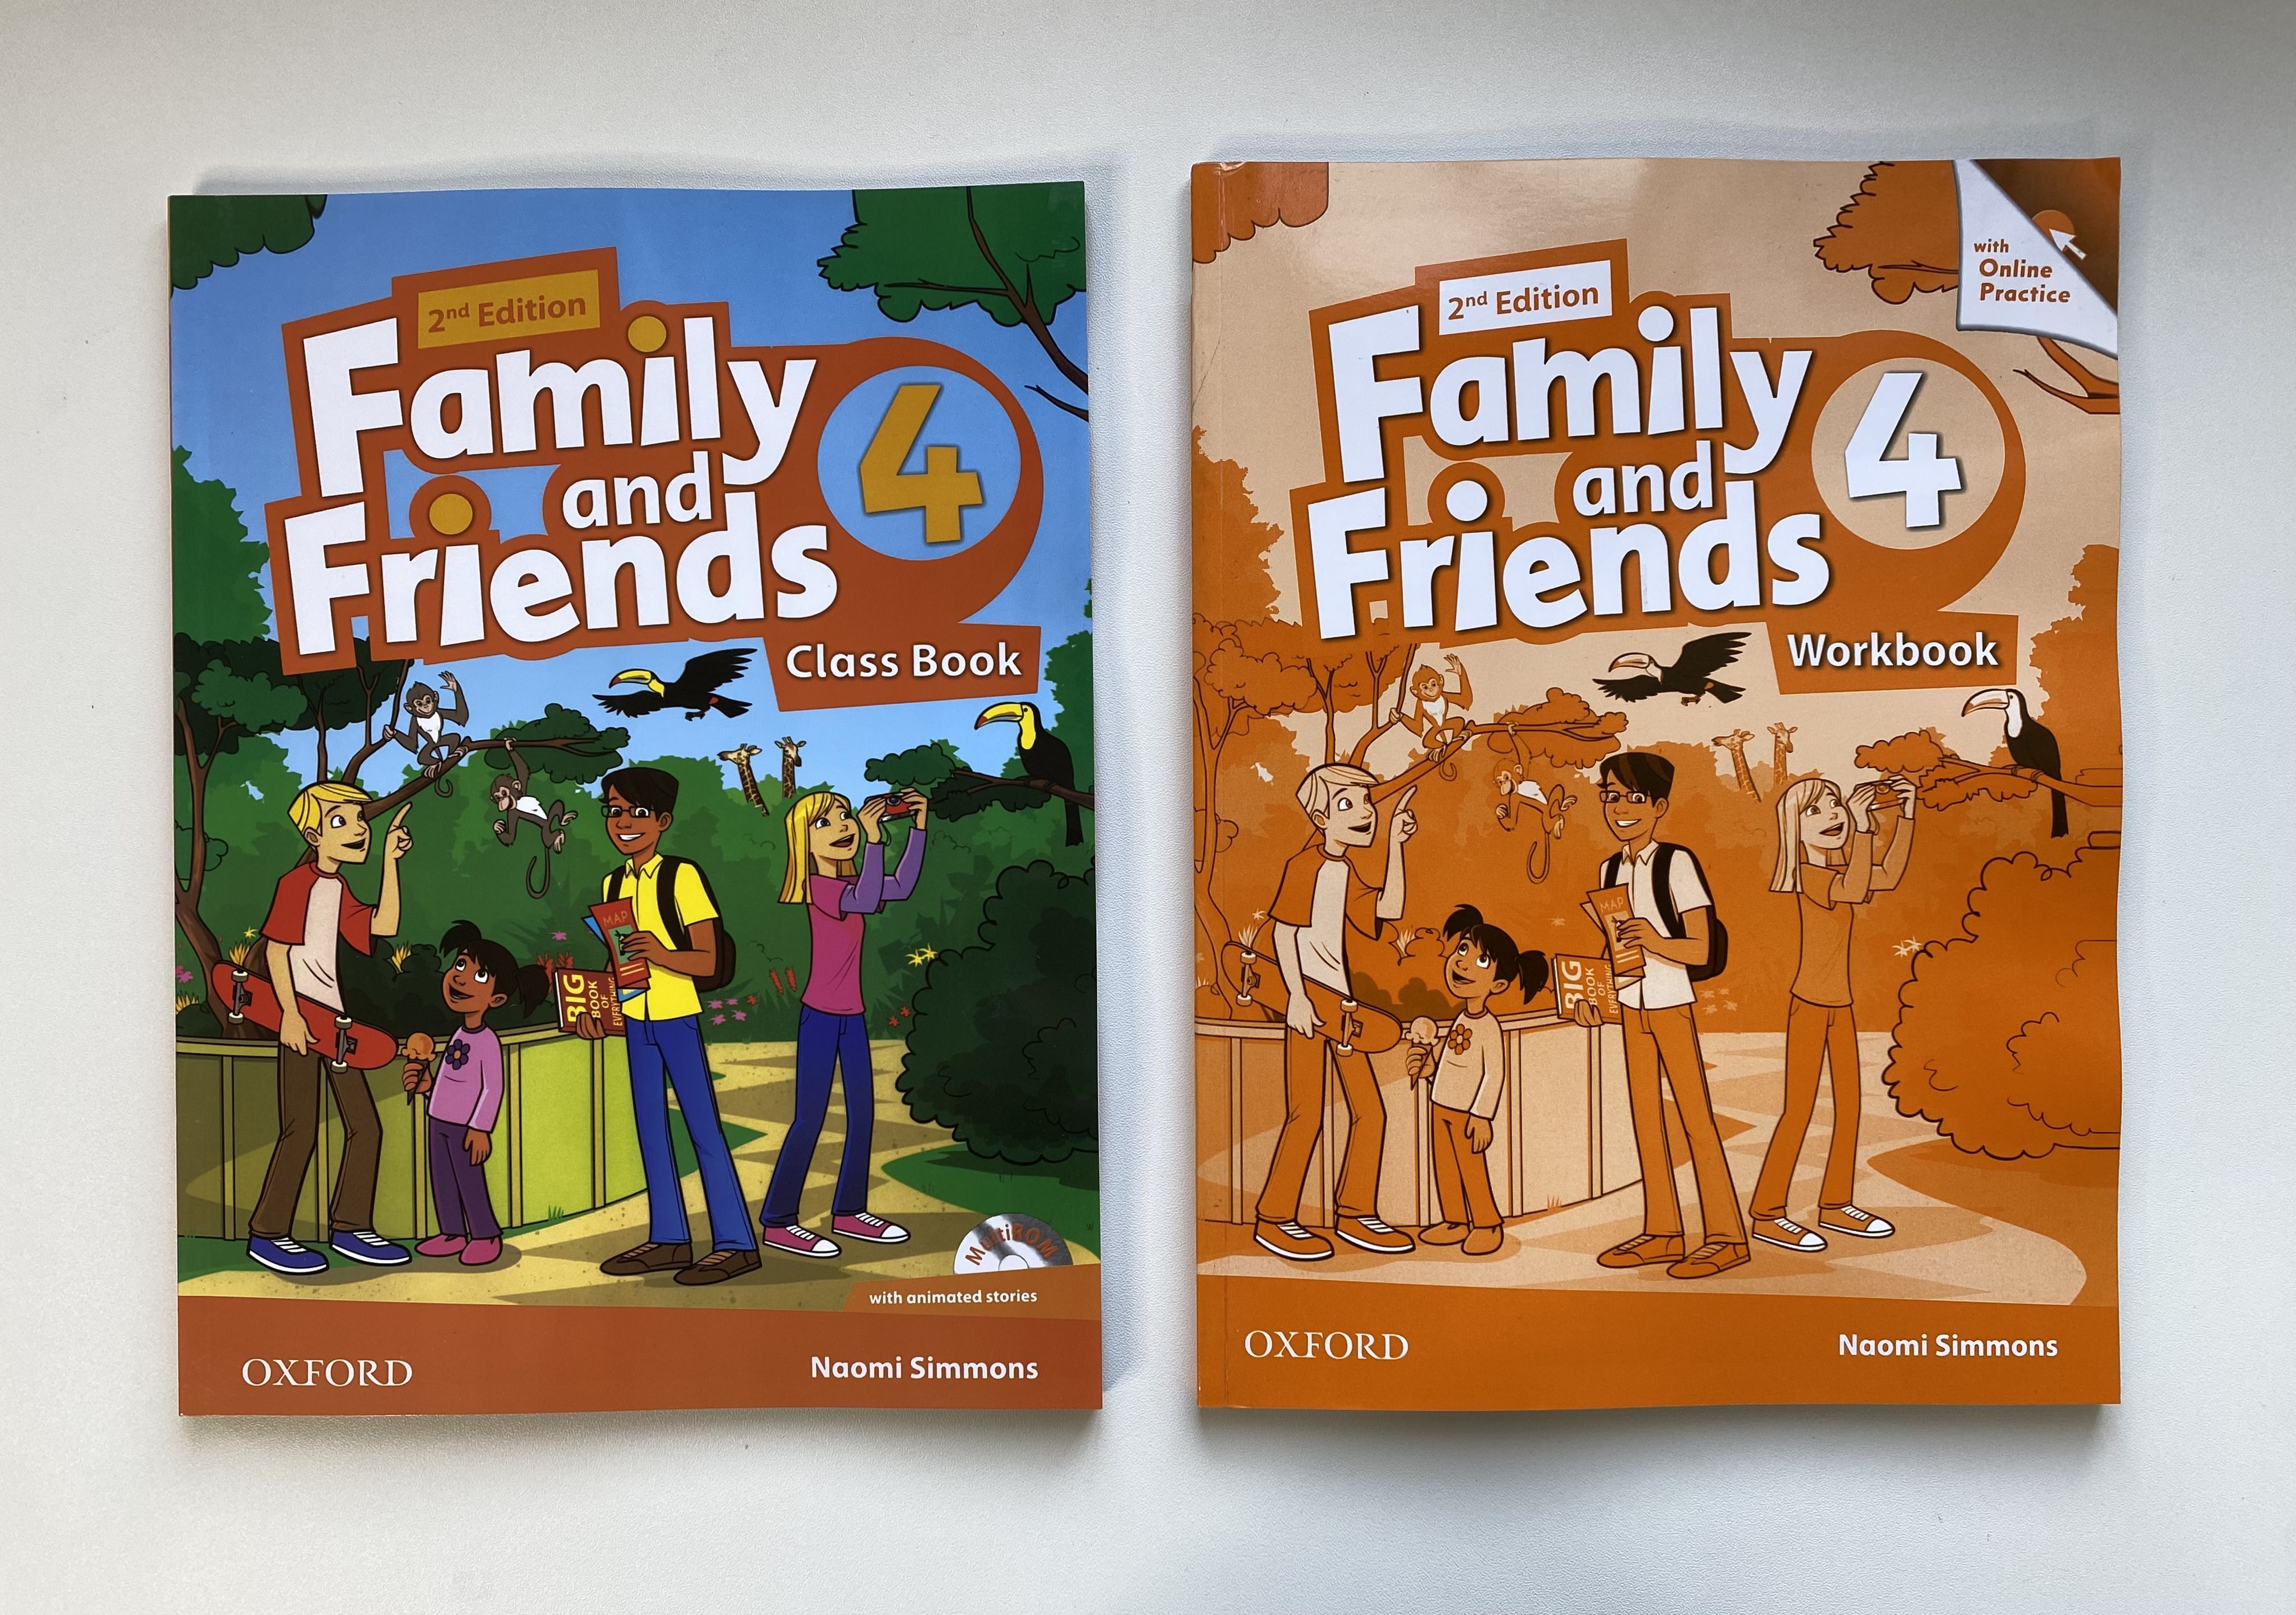 Френд энд фэмили. Family and friends 4. Family and friends 4 обложка. Test Family and friends 4. Family and friends 4 3d Edition.